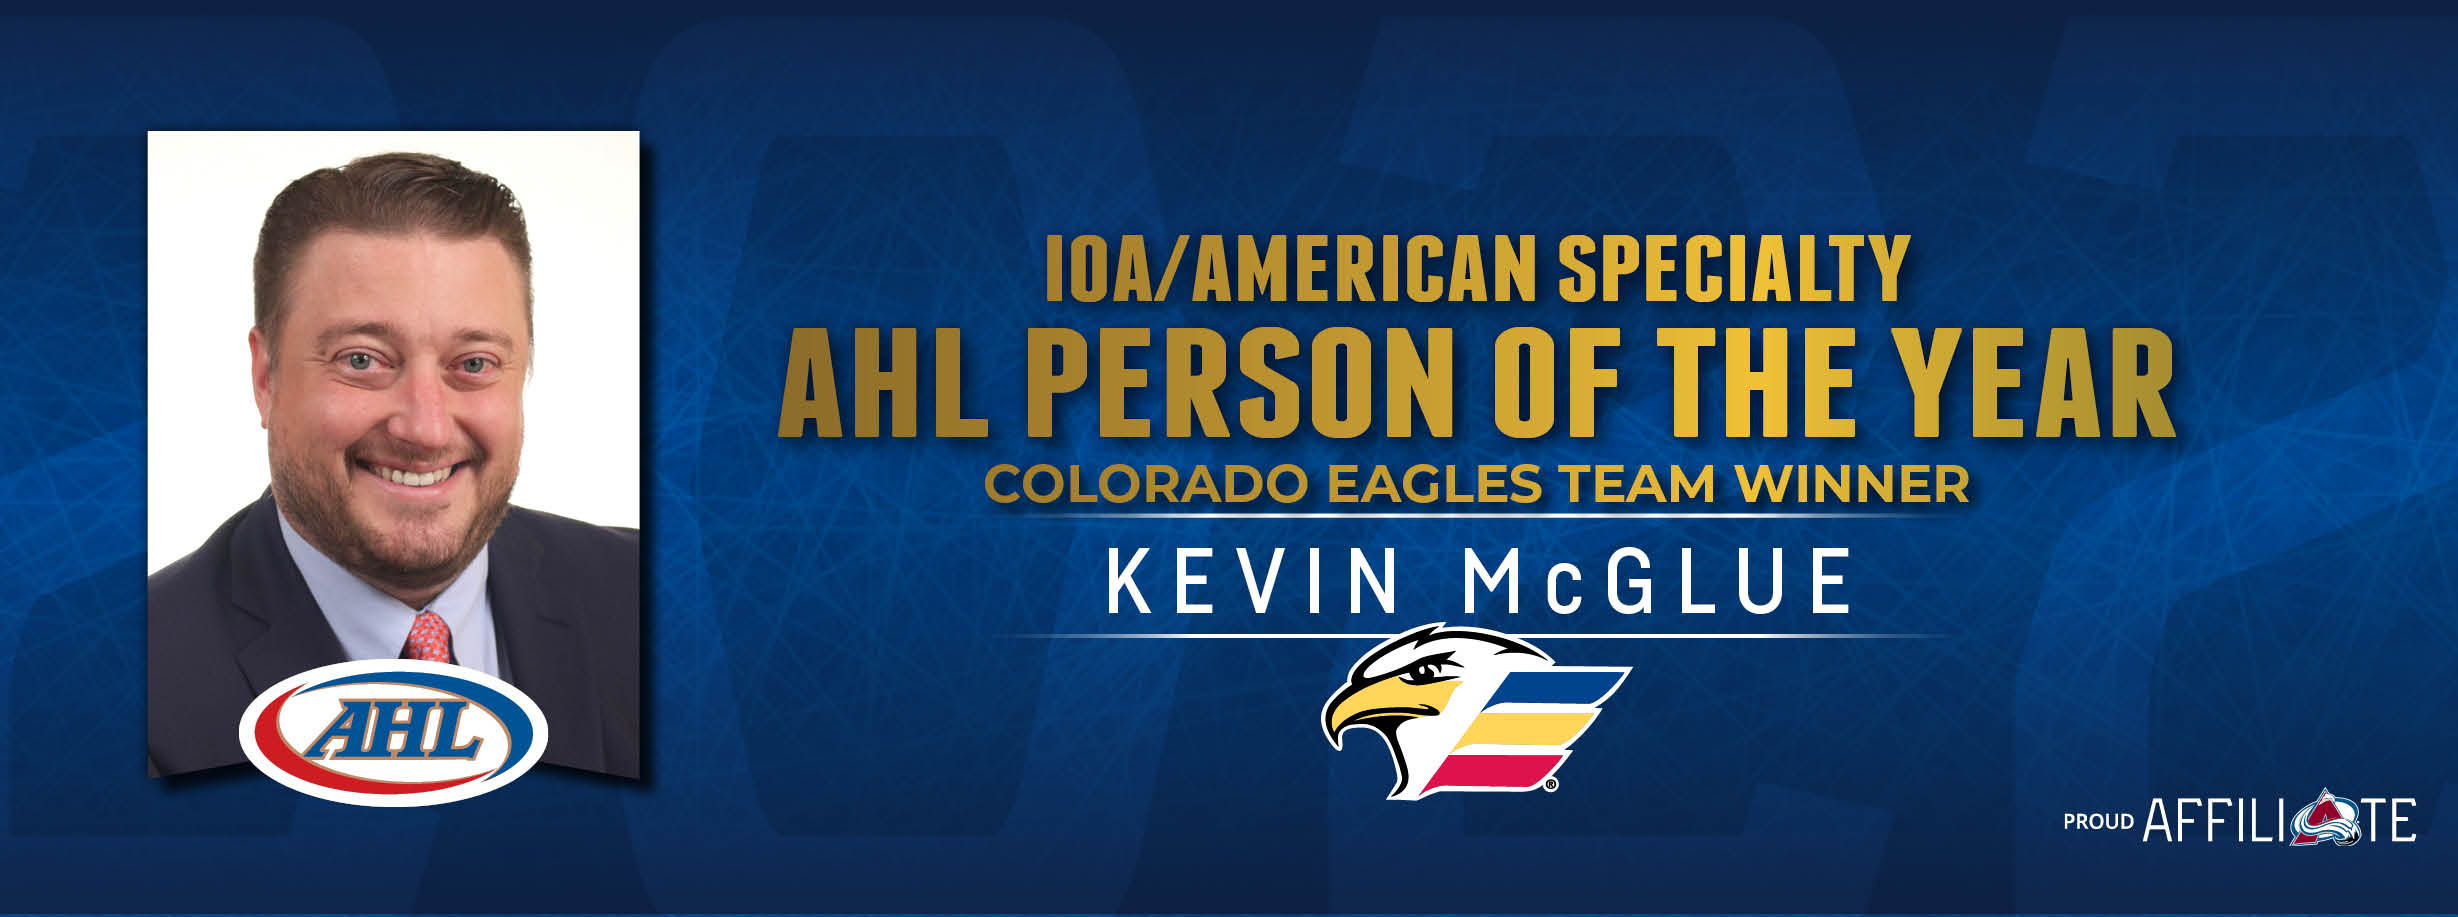 Kevin McGlue named Colorado Eagles Team Winner...